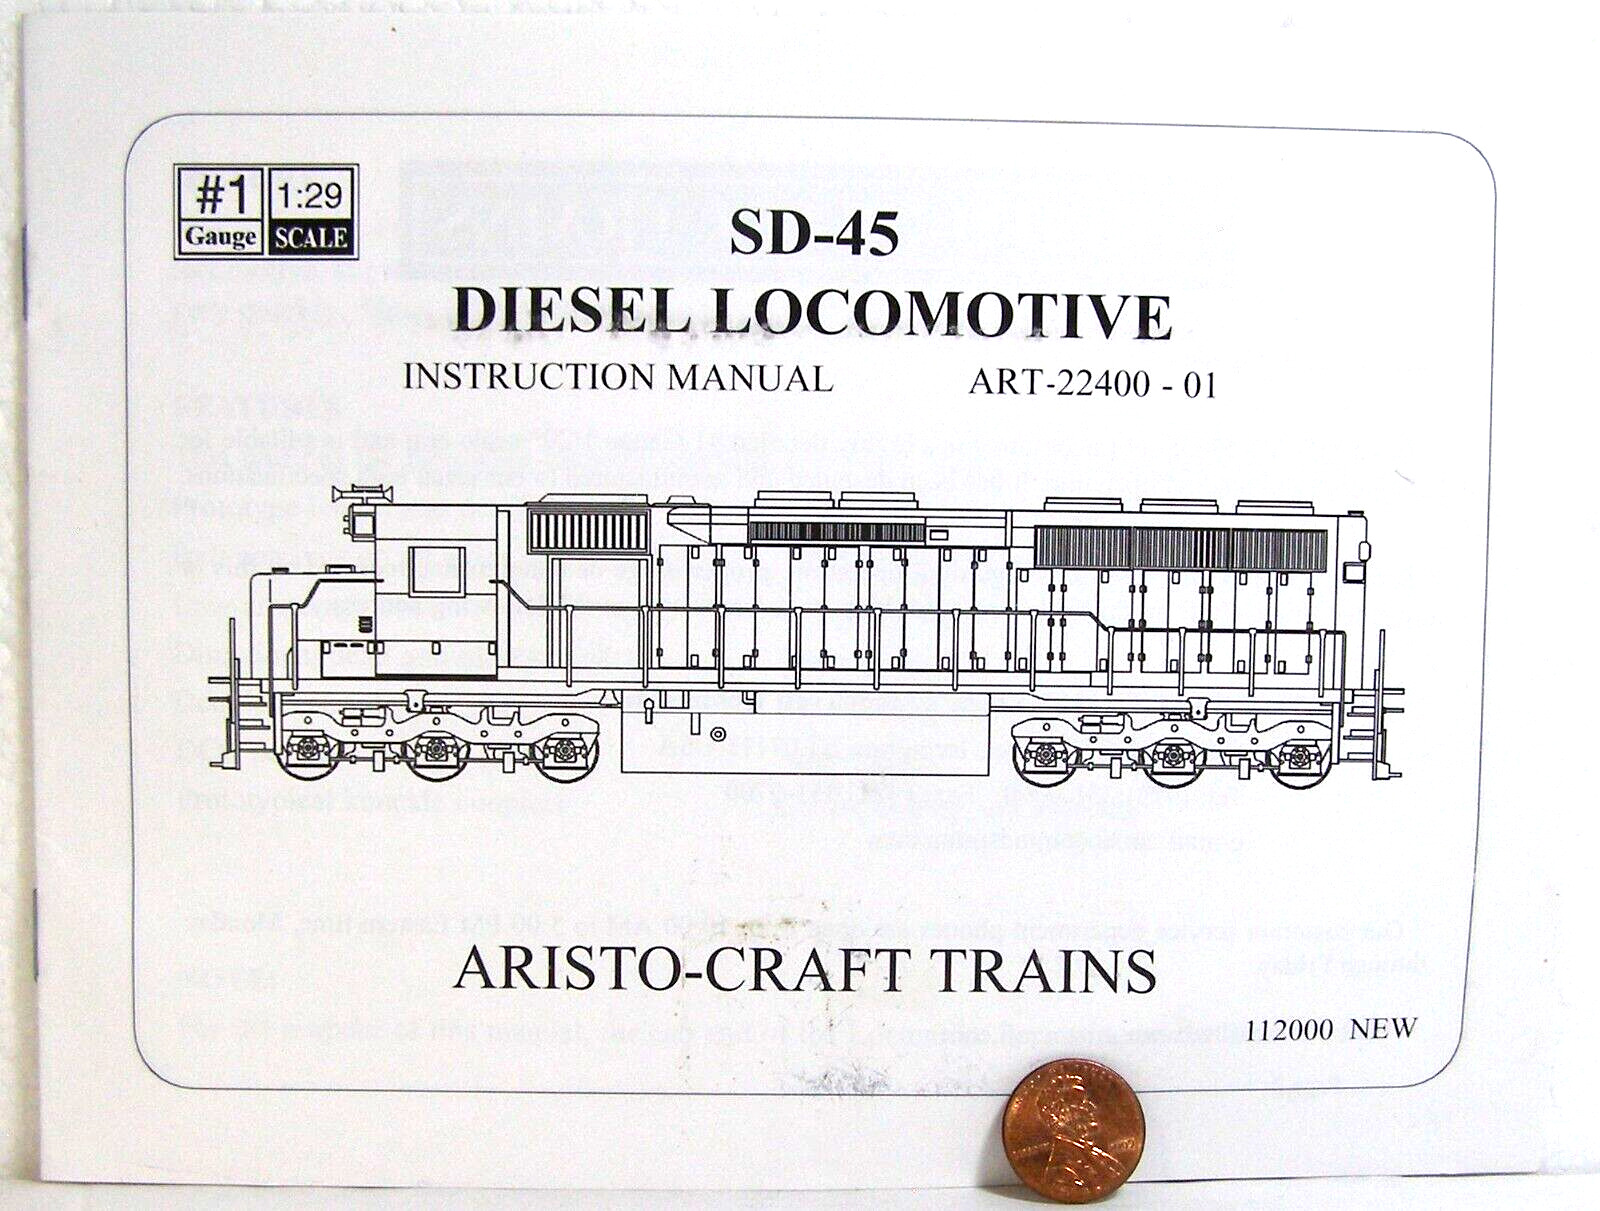 Aristo-Craft Trains Manual SD-45 Diesel Locomotive ART-22400-01 1:29 IIS